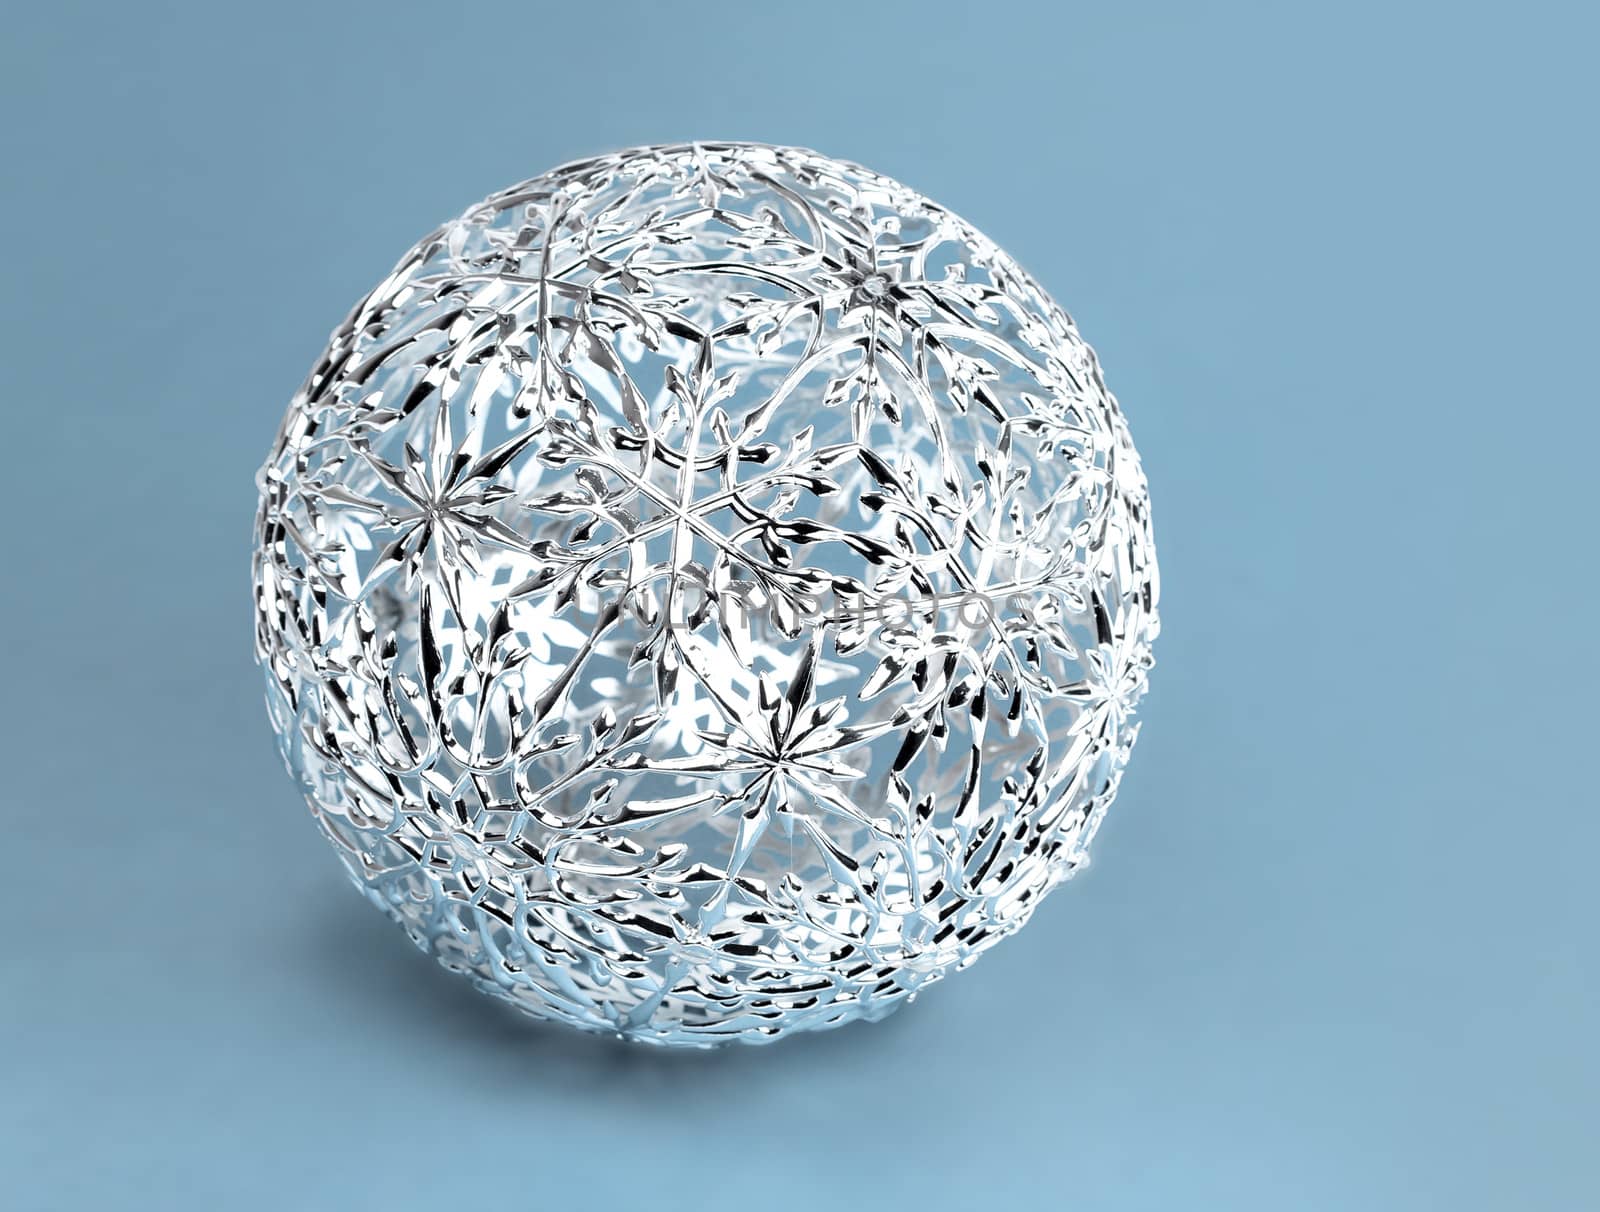 Silver Christmas filigrane ornament decoration ball